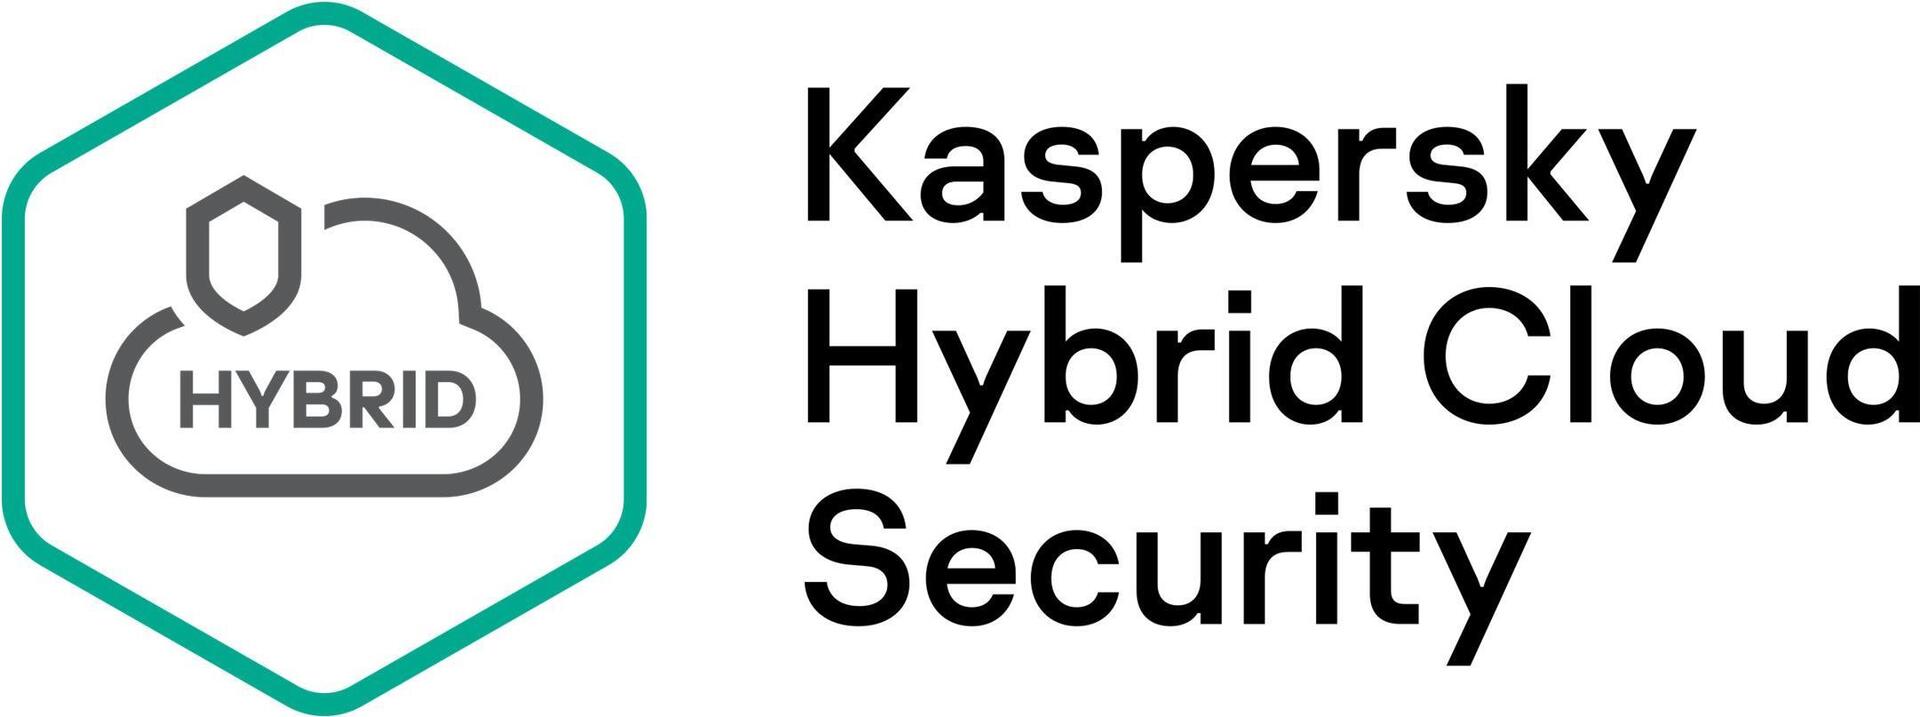 KASPERSKY Hybrid Cloud Security Enterprise CPU European Edition 2 - CPU 3 year Renewal Plus License (KL4553XABT9)